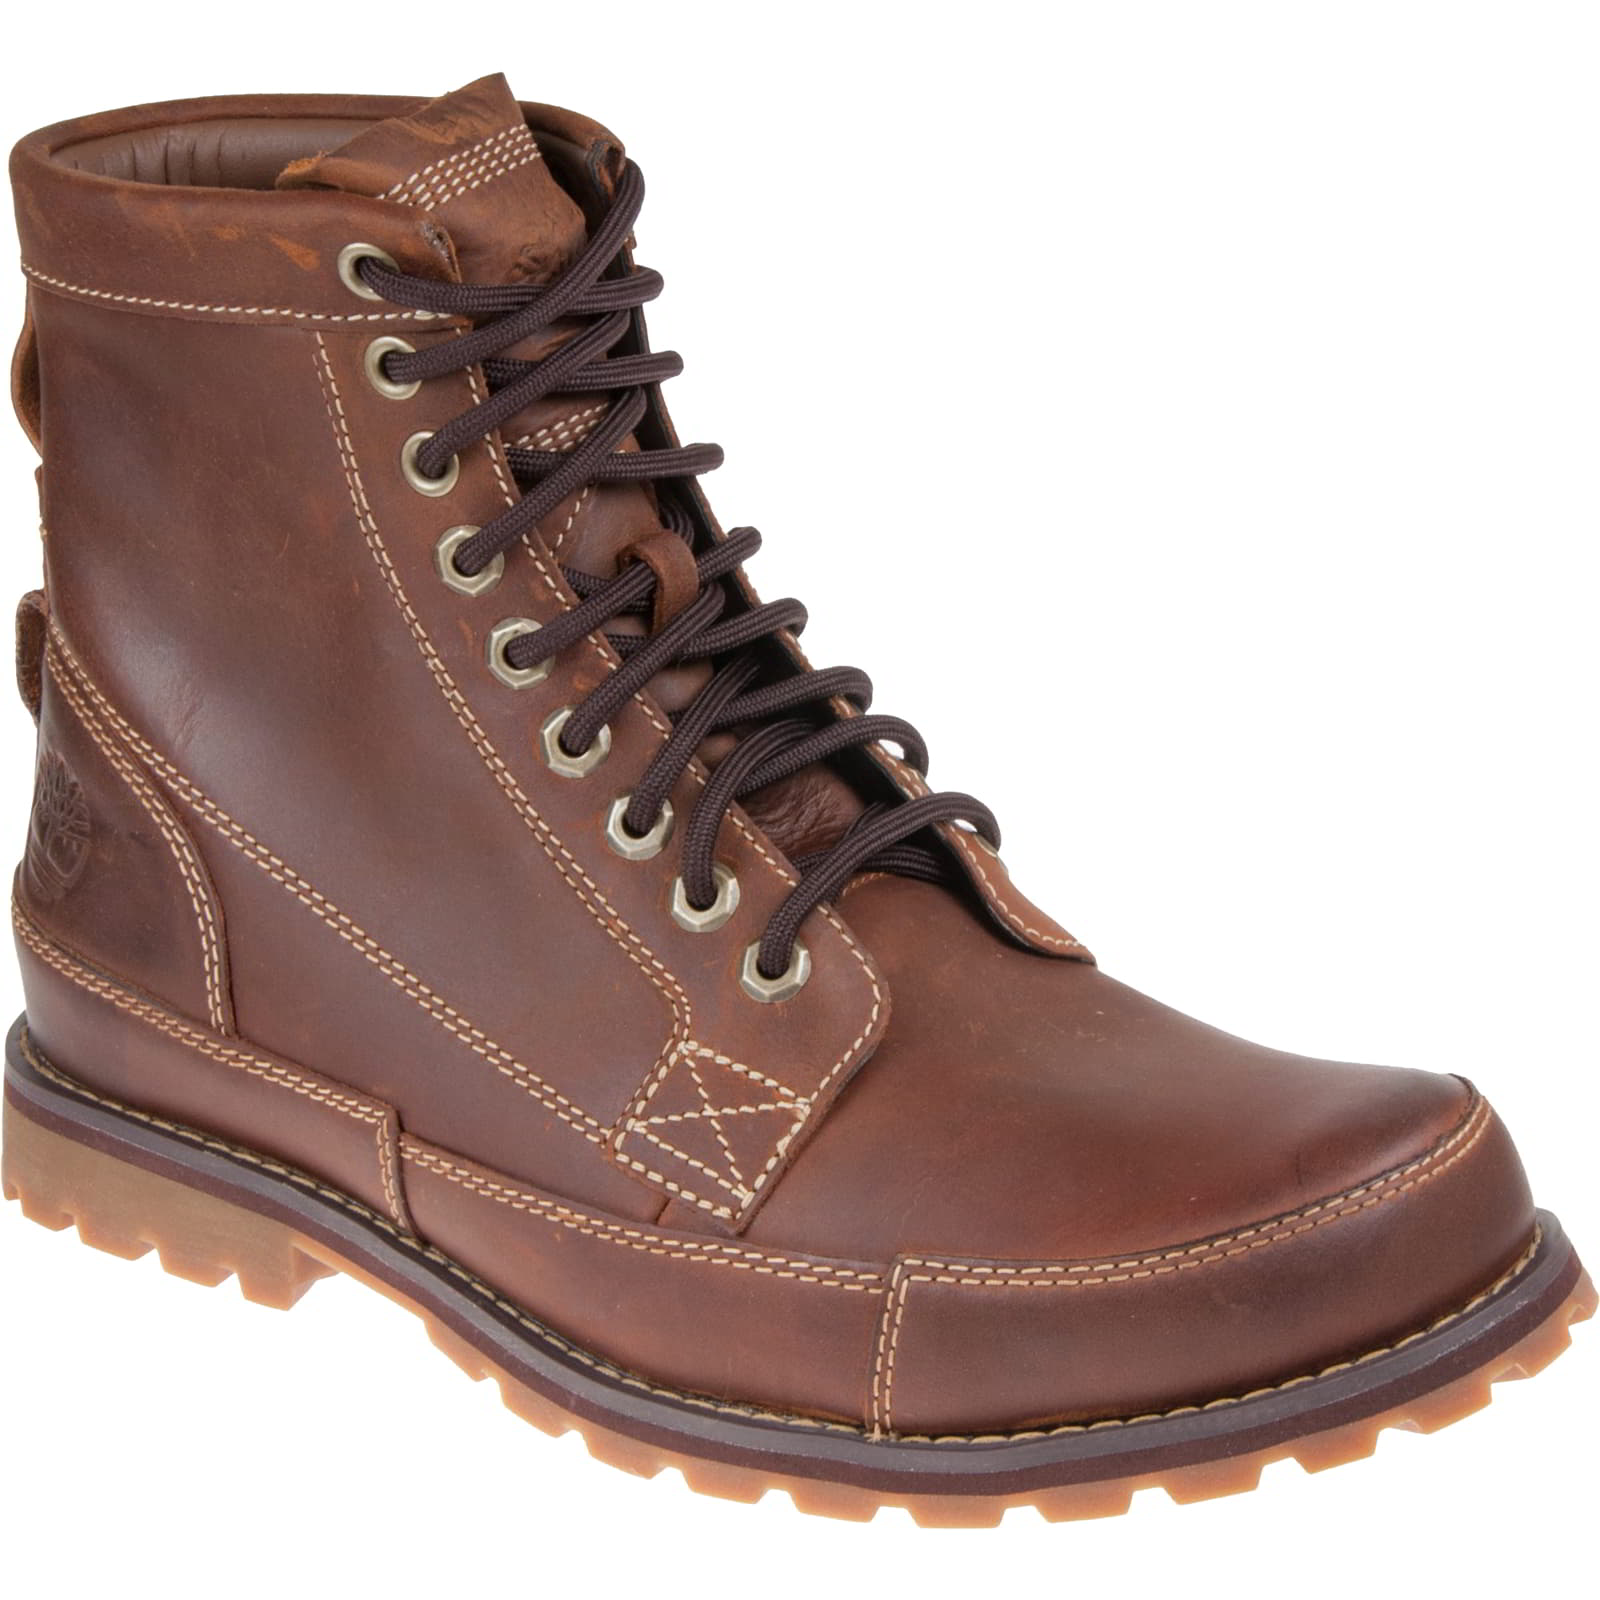 Timberland Men's 15551 Originals 6 Inch Desert Ankle Boots - UK 8 / US 8.5